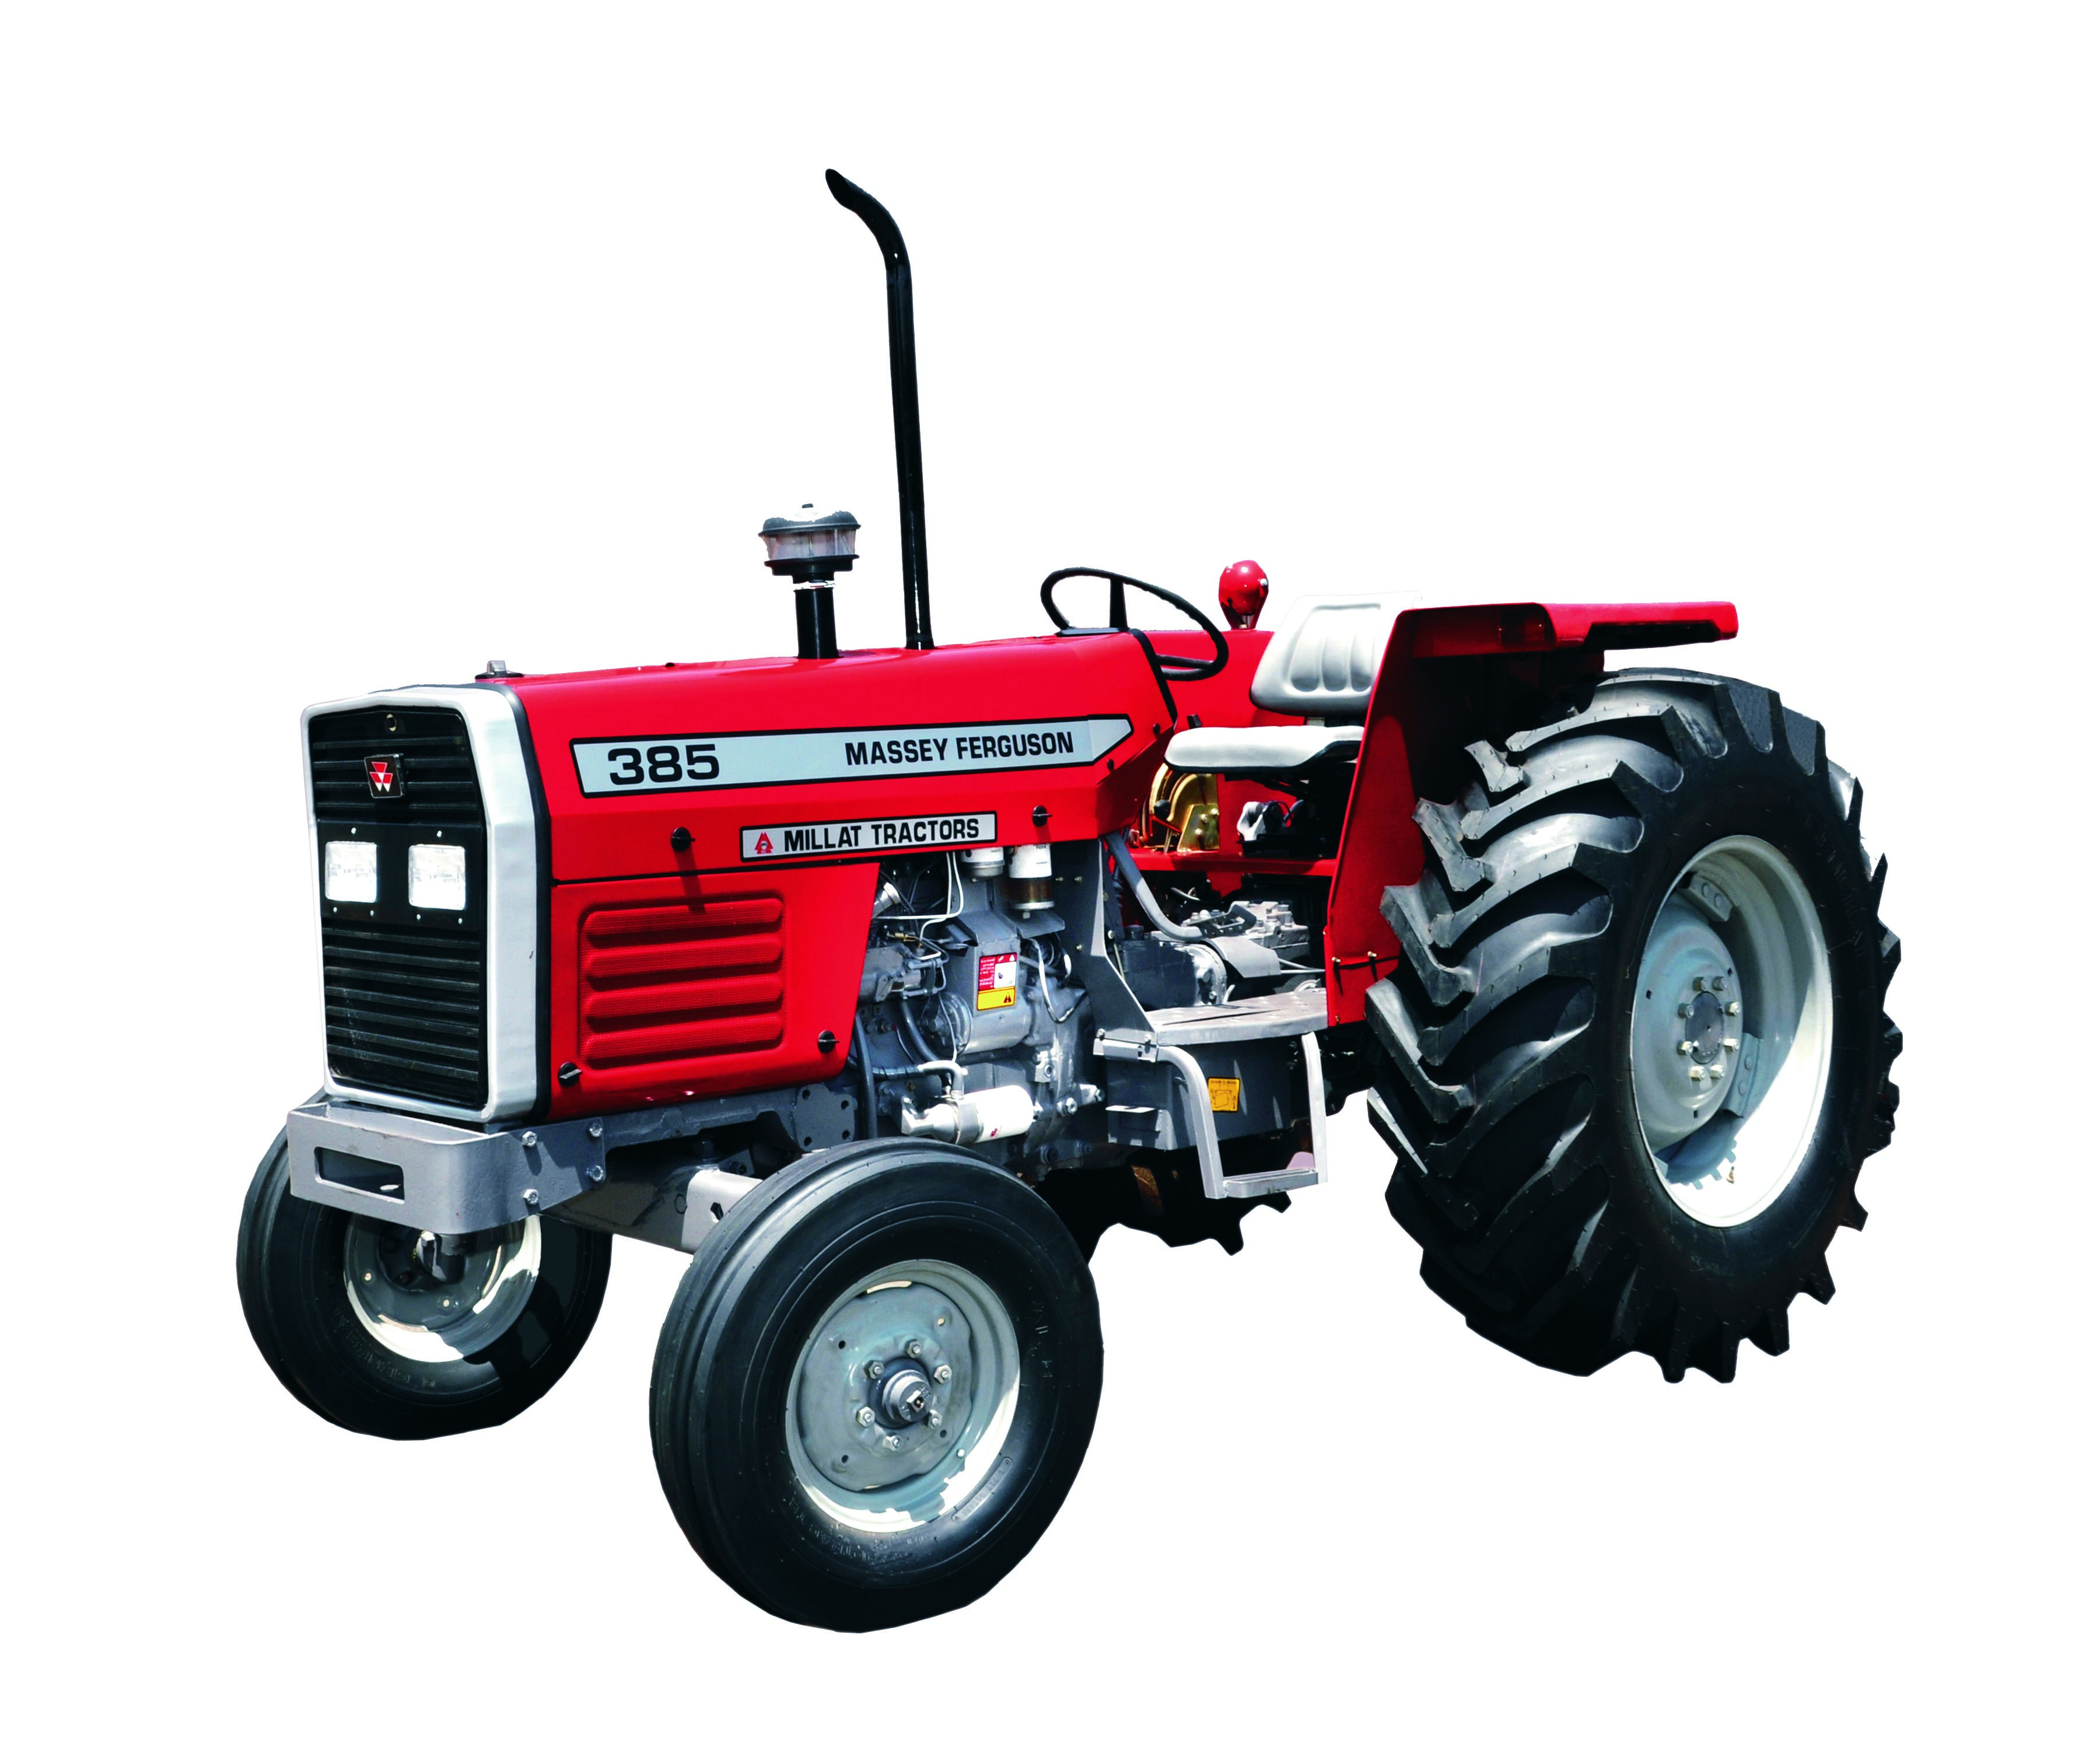 MF 385 Tractor